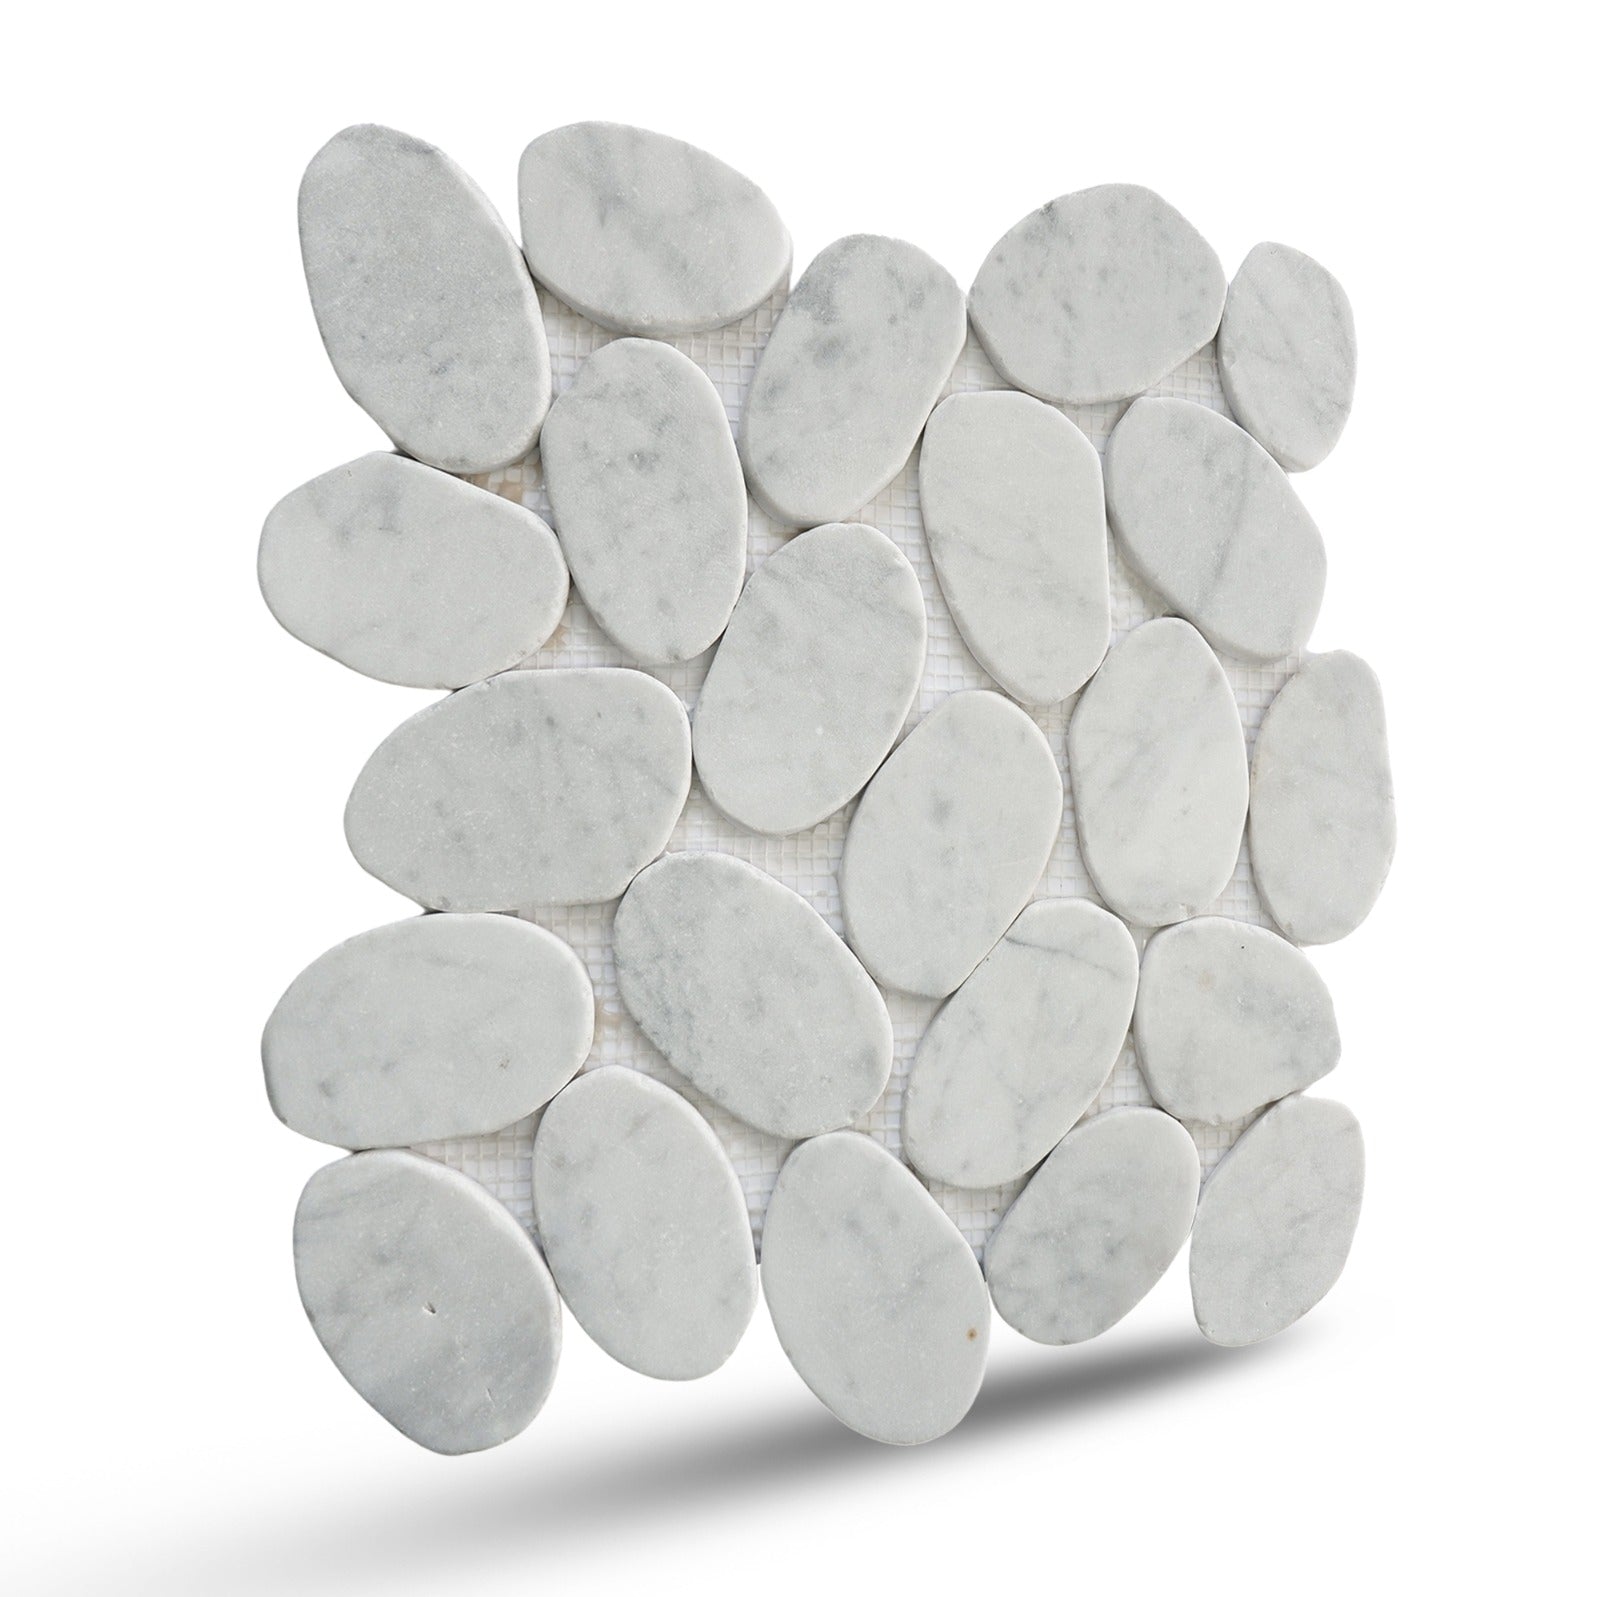 White Marble Mosaic Tile, XL SLICE CARRARA Mosaic Wall & Floor Tile